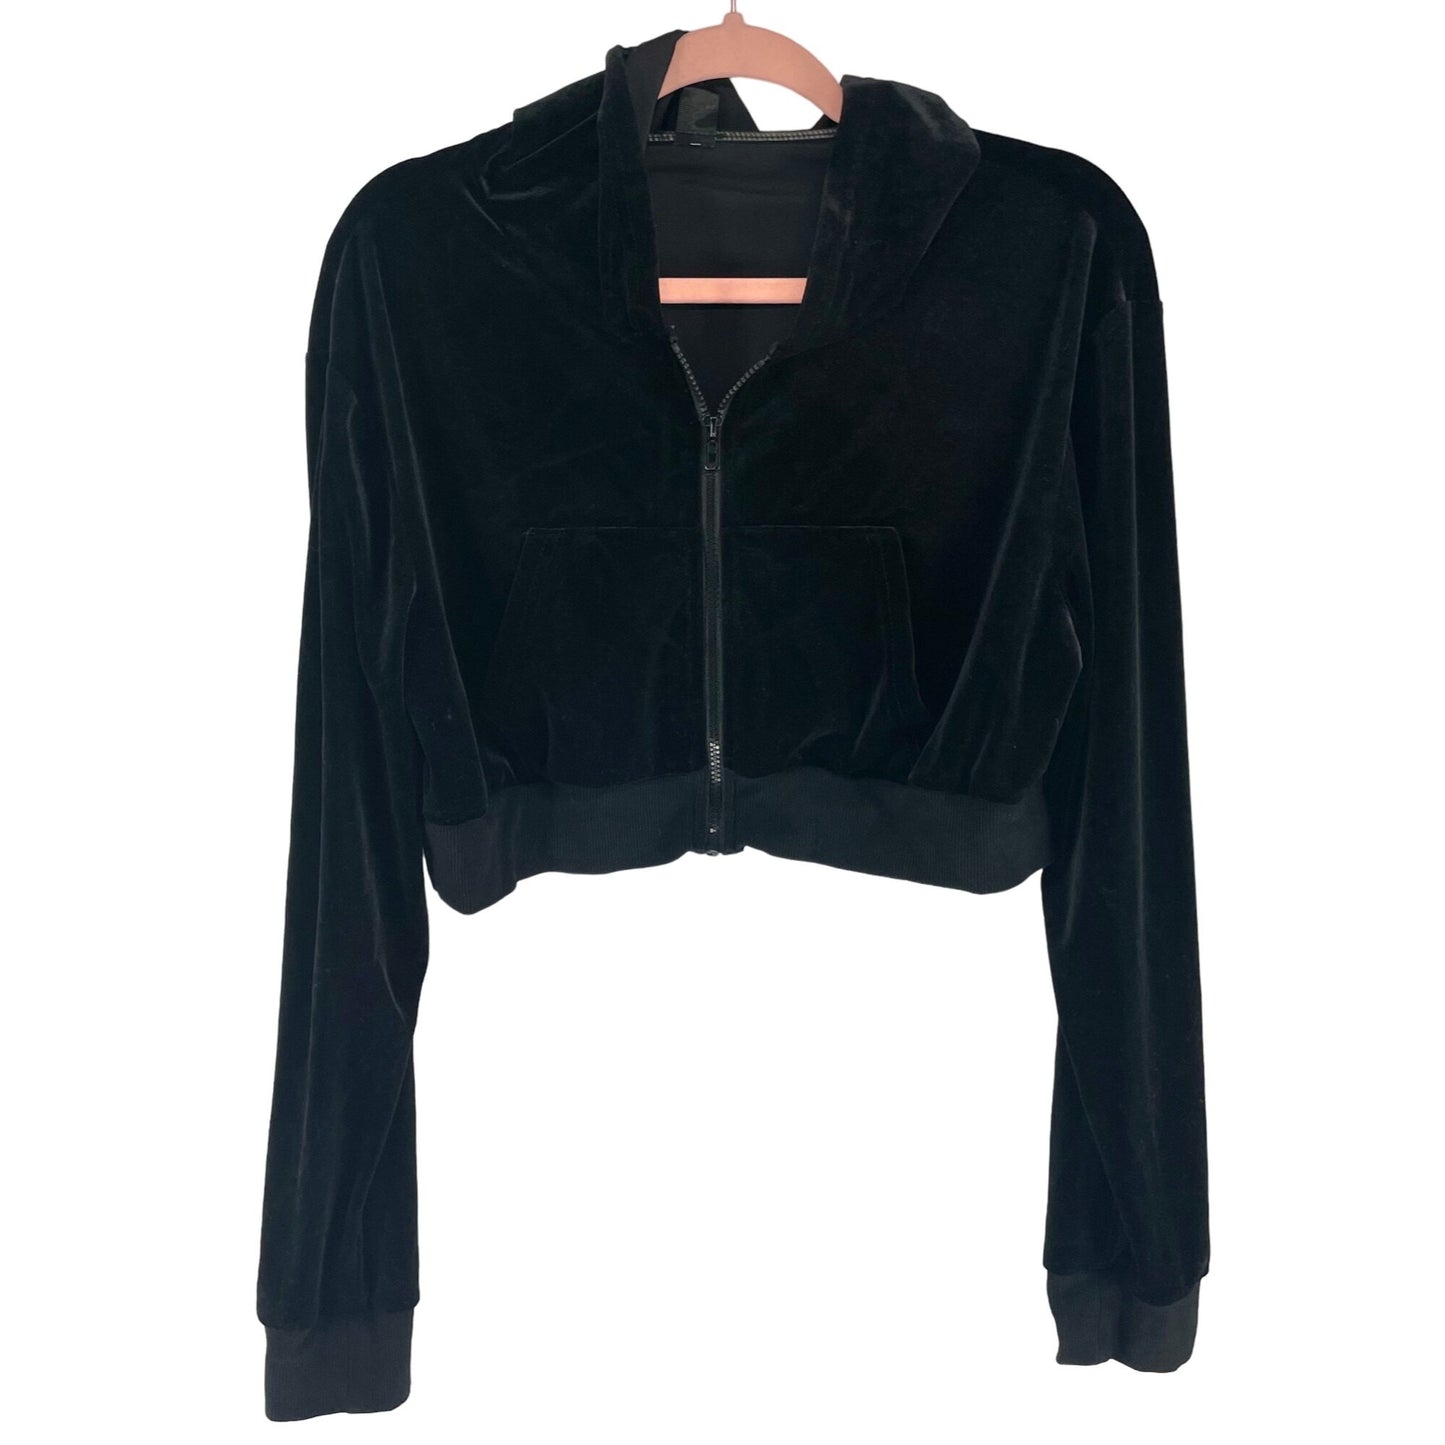 Shein Women's Size Large Black Cropped Zip-Up Plush Velour/Velvet Hoodie Jacket W/ Pockets